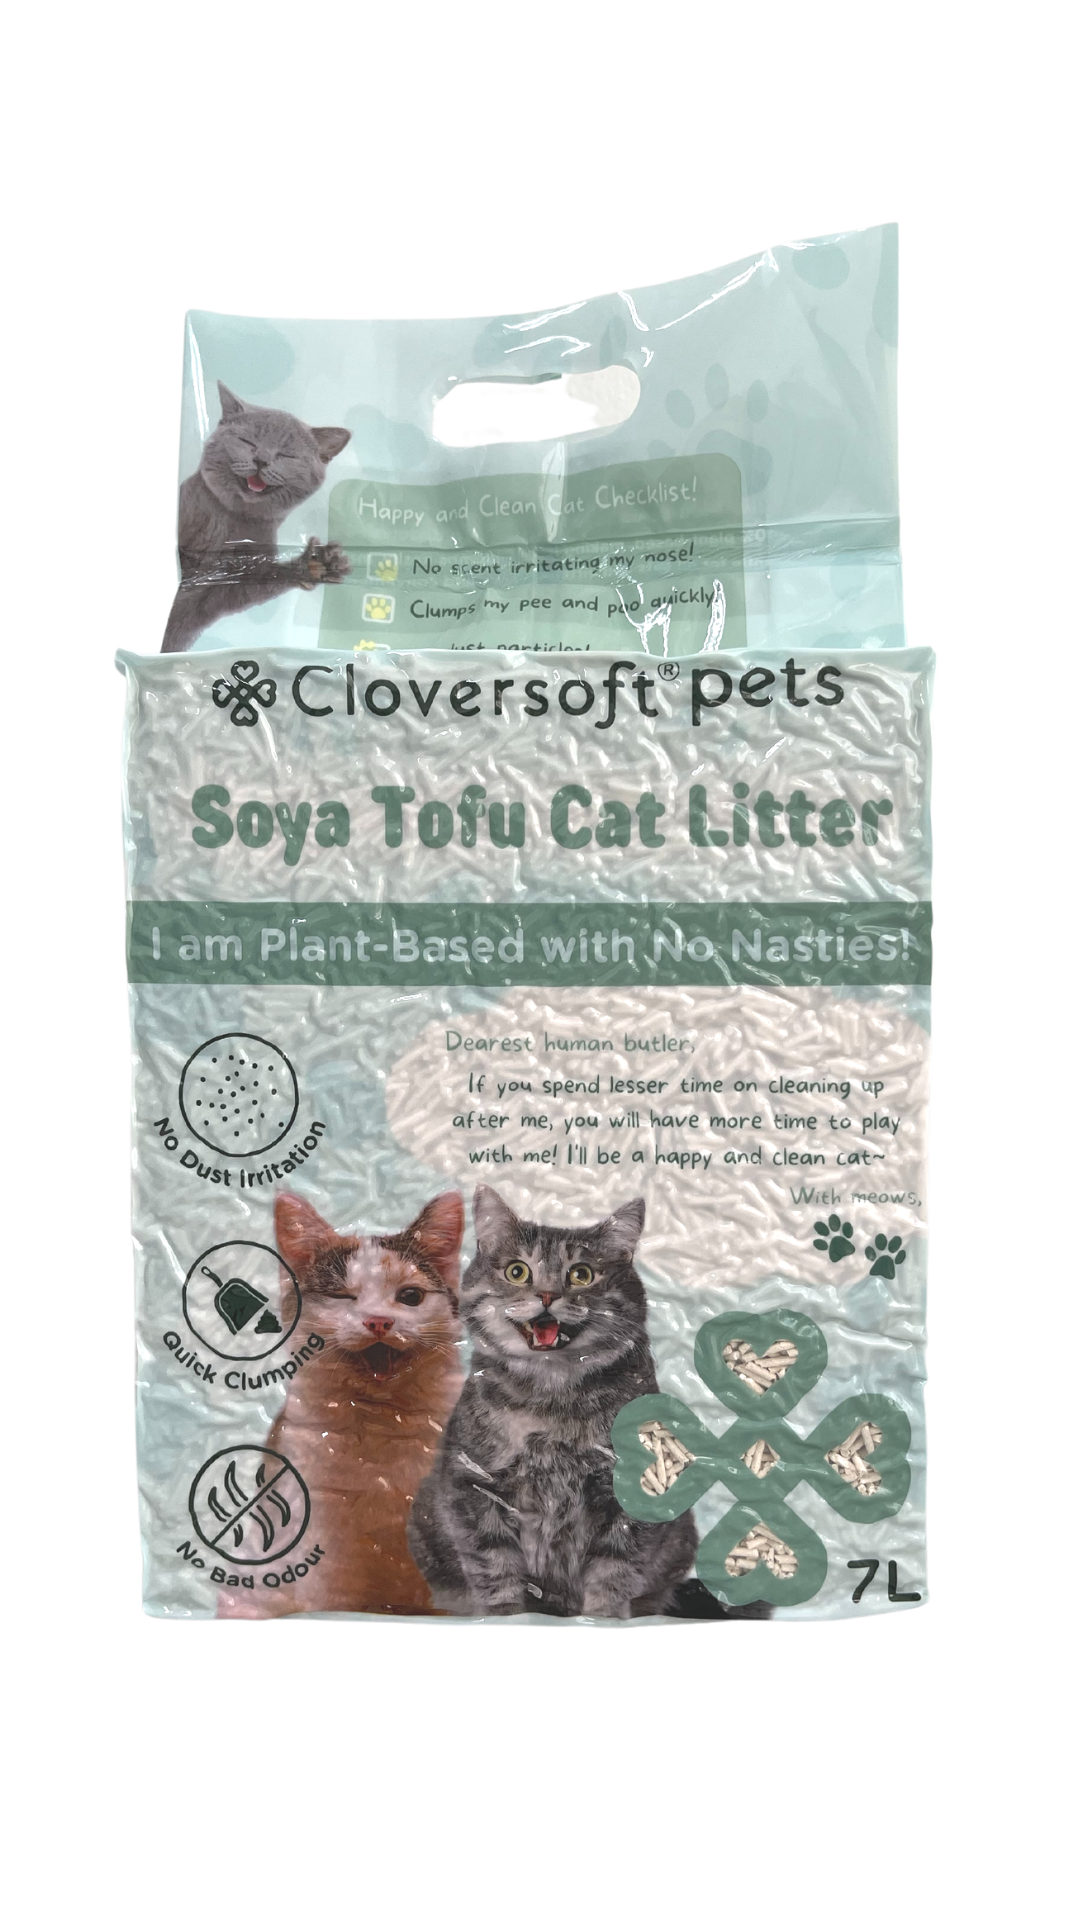 Cloversoft Pets Soya Tofu Cat Litter 7L